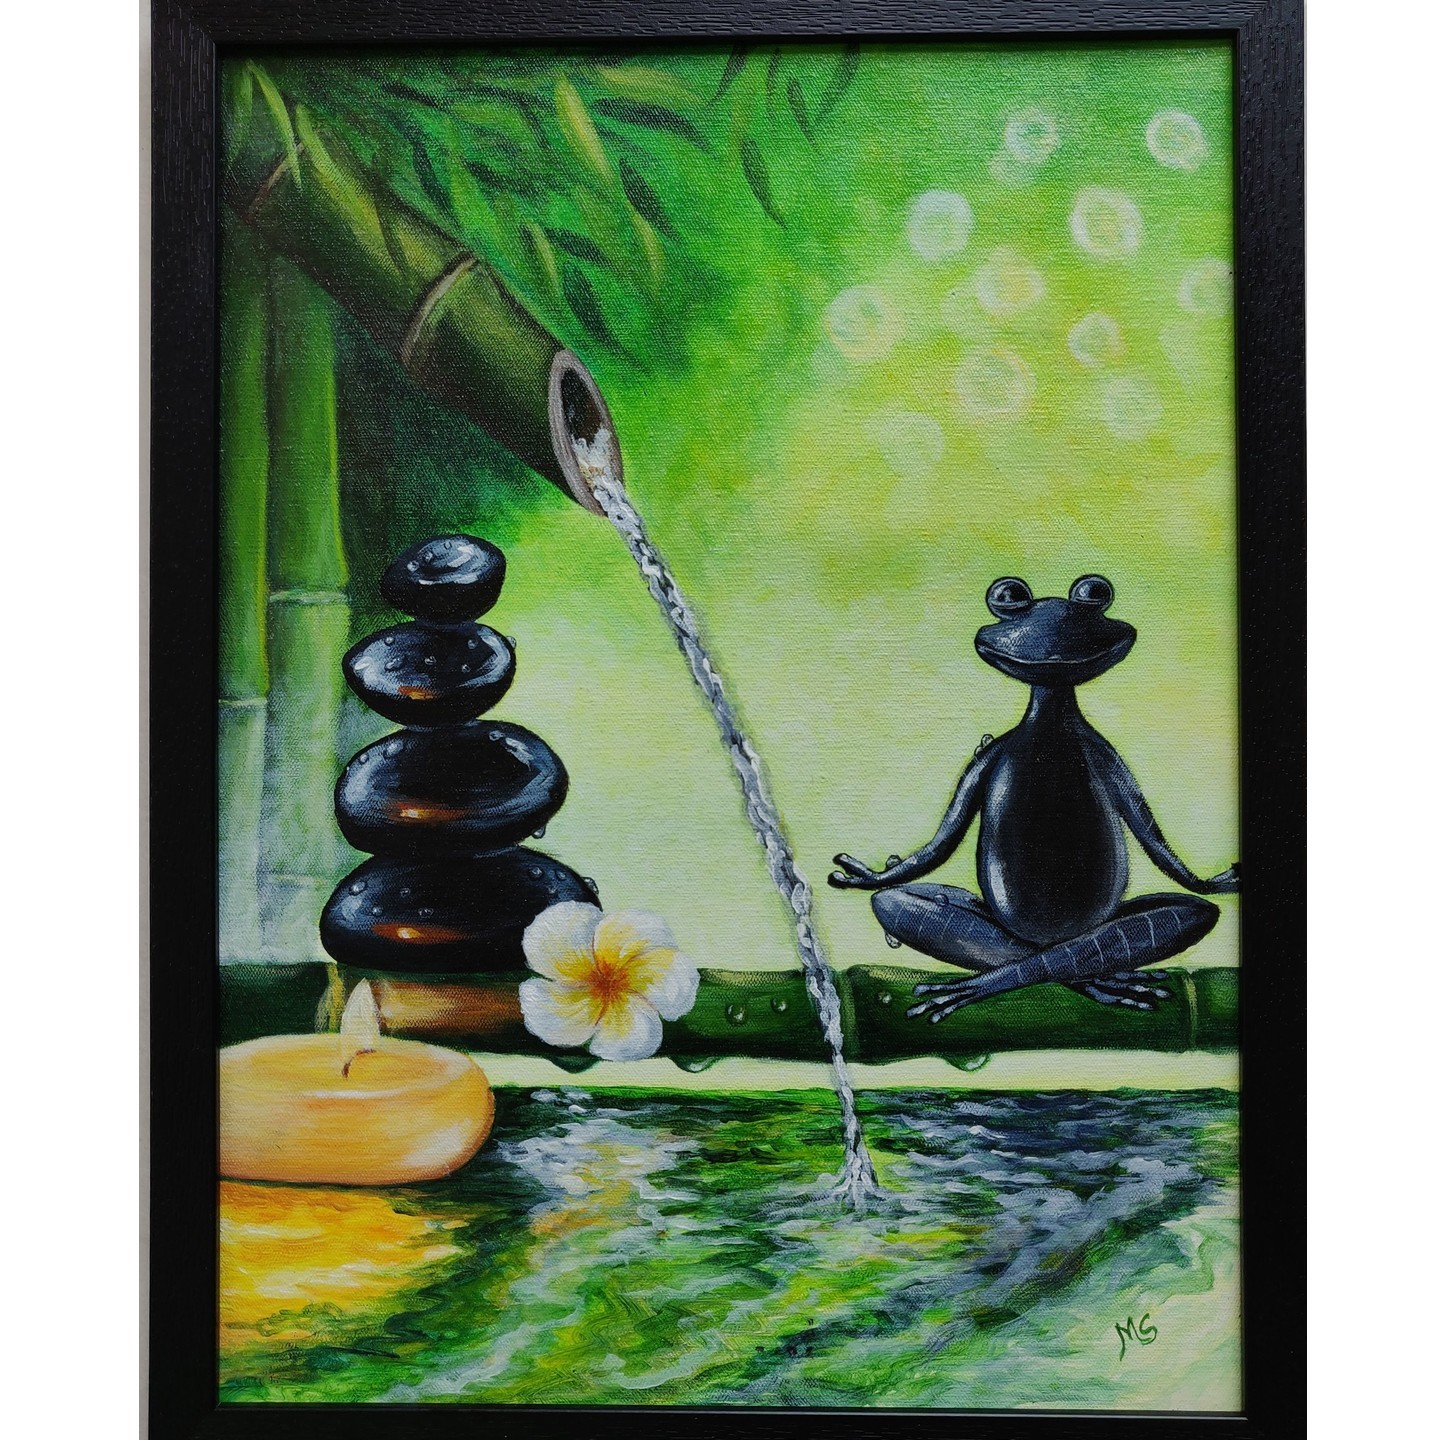 Zen meditation frog handpainted acrylic painting on canvas